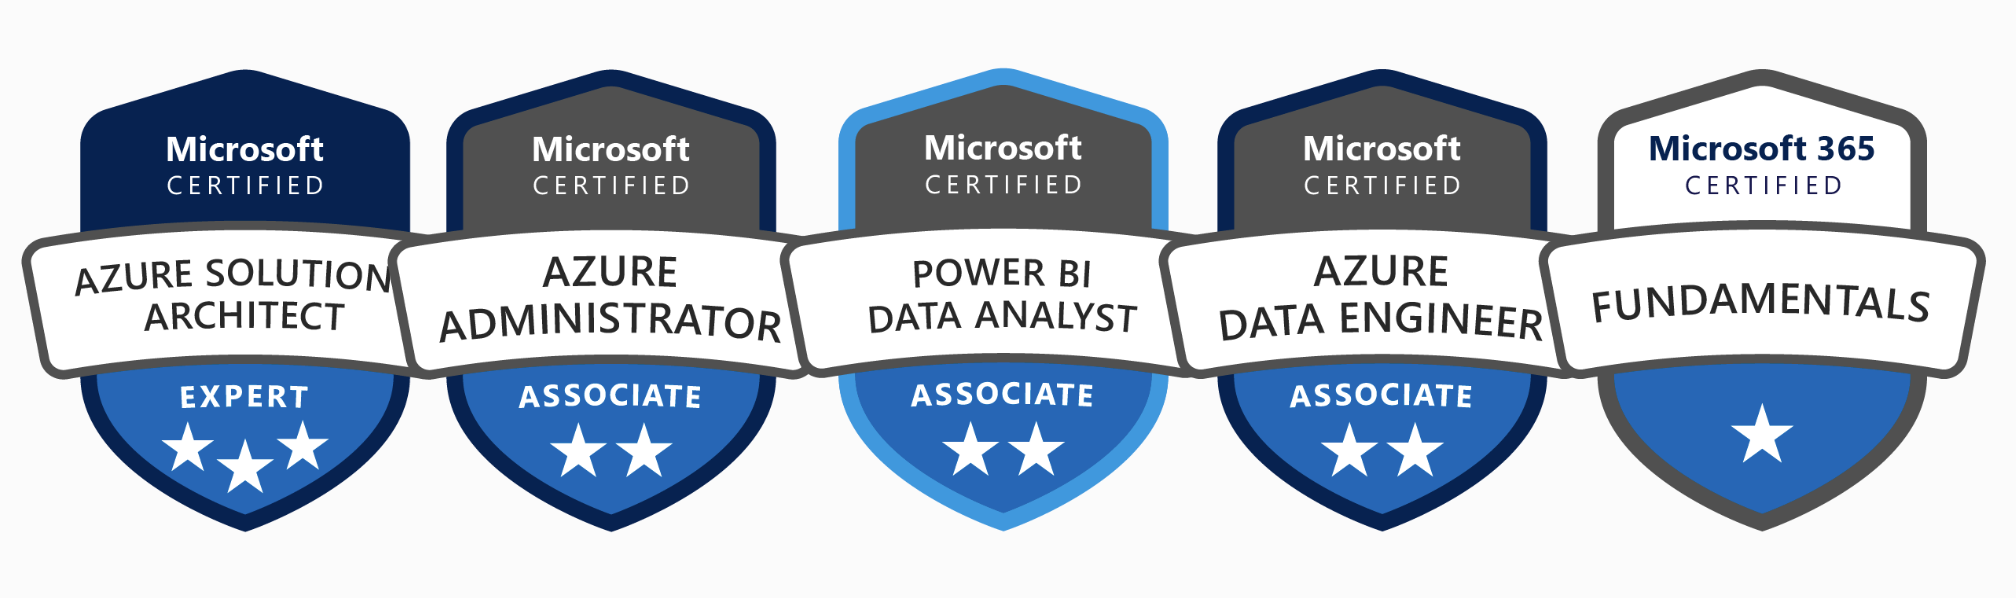 Microsoft Azure certifications